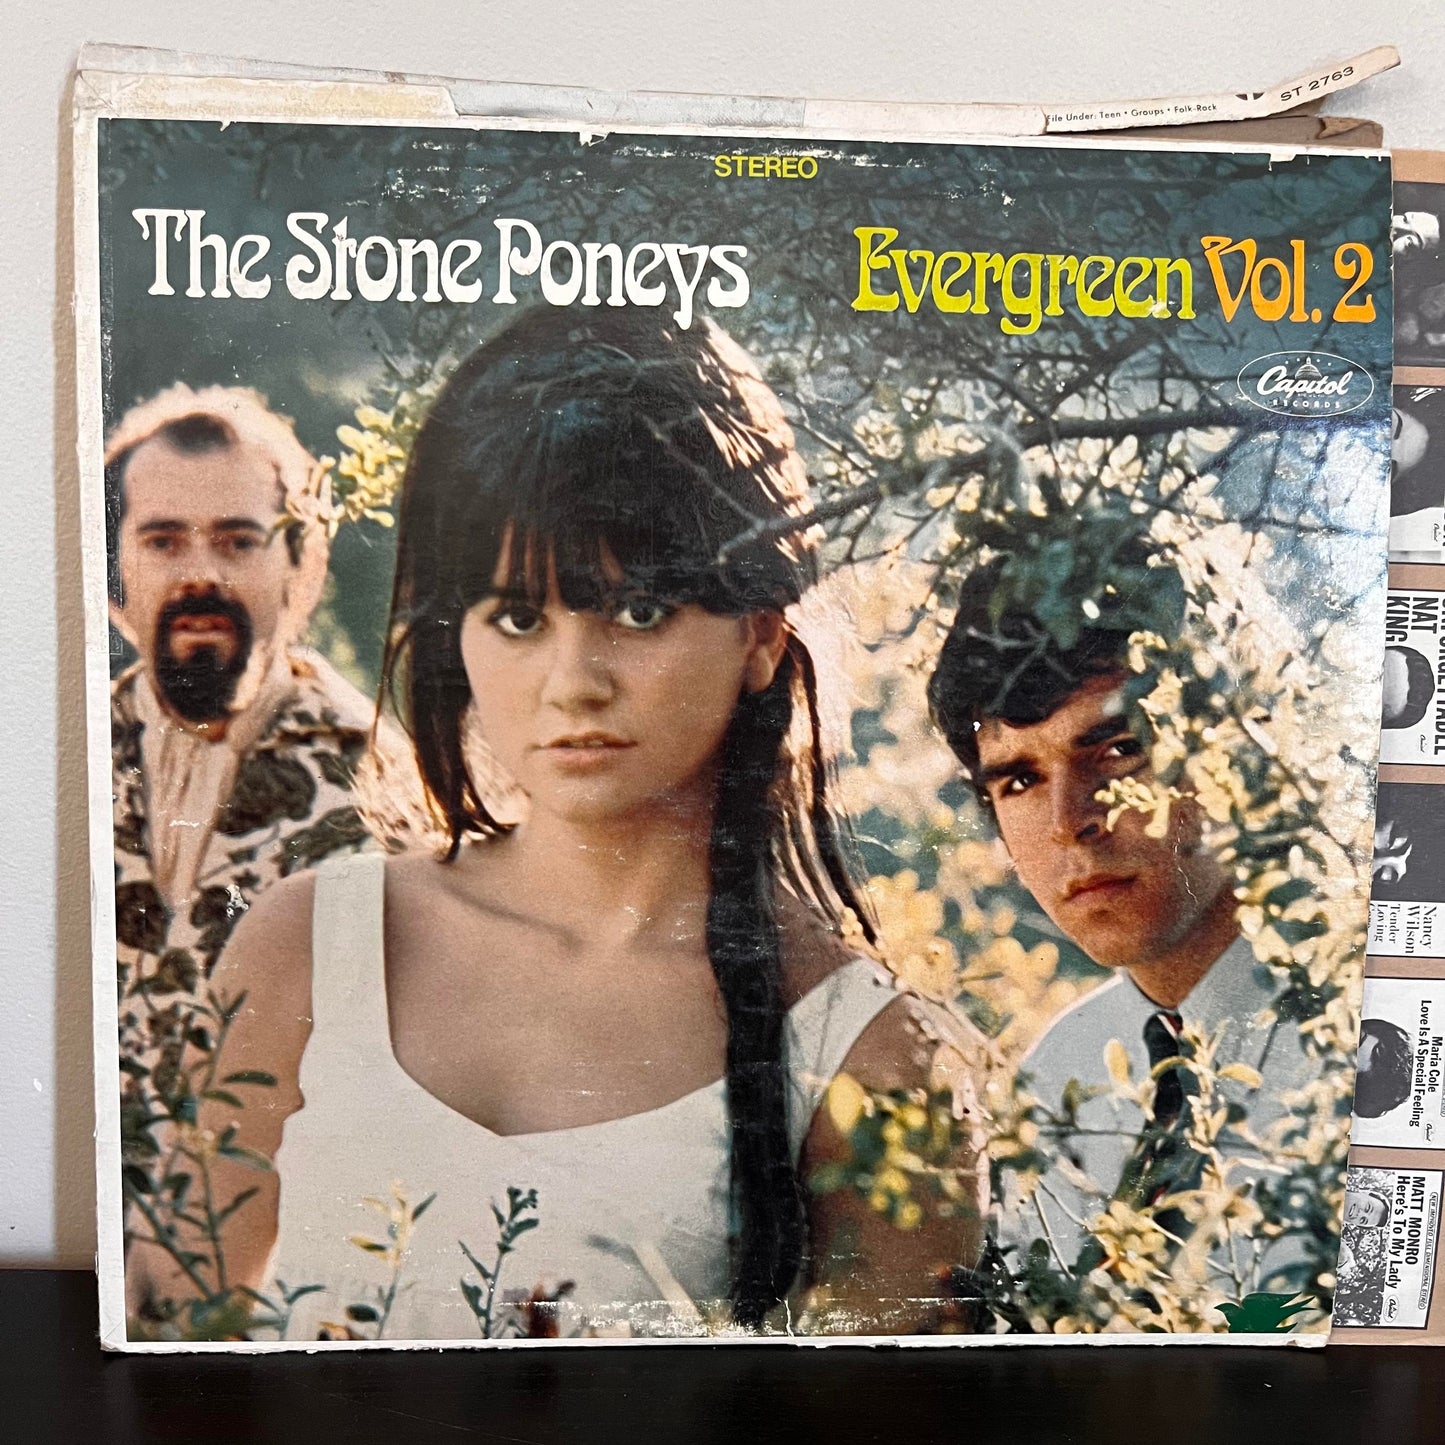 The Stone Poneys (Linda Ronstadt) Evergreen Vol. 2 Capitol ST 2763 VG Vinyl